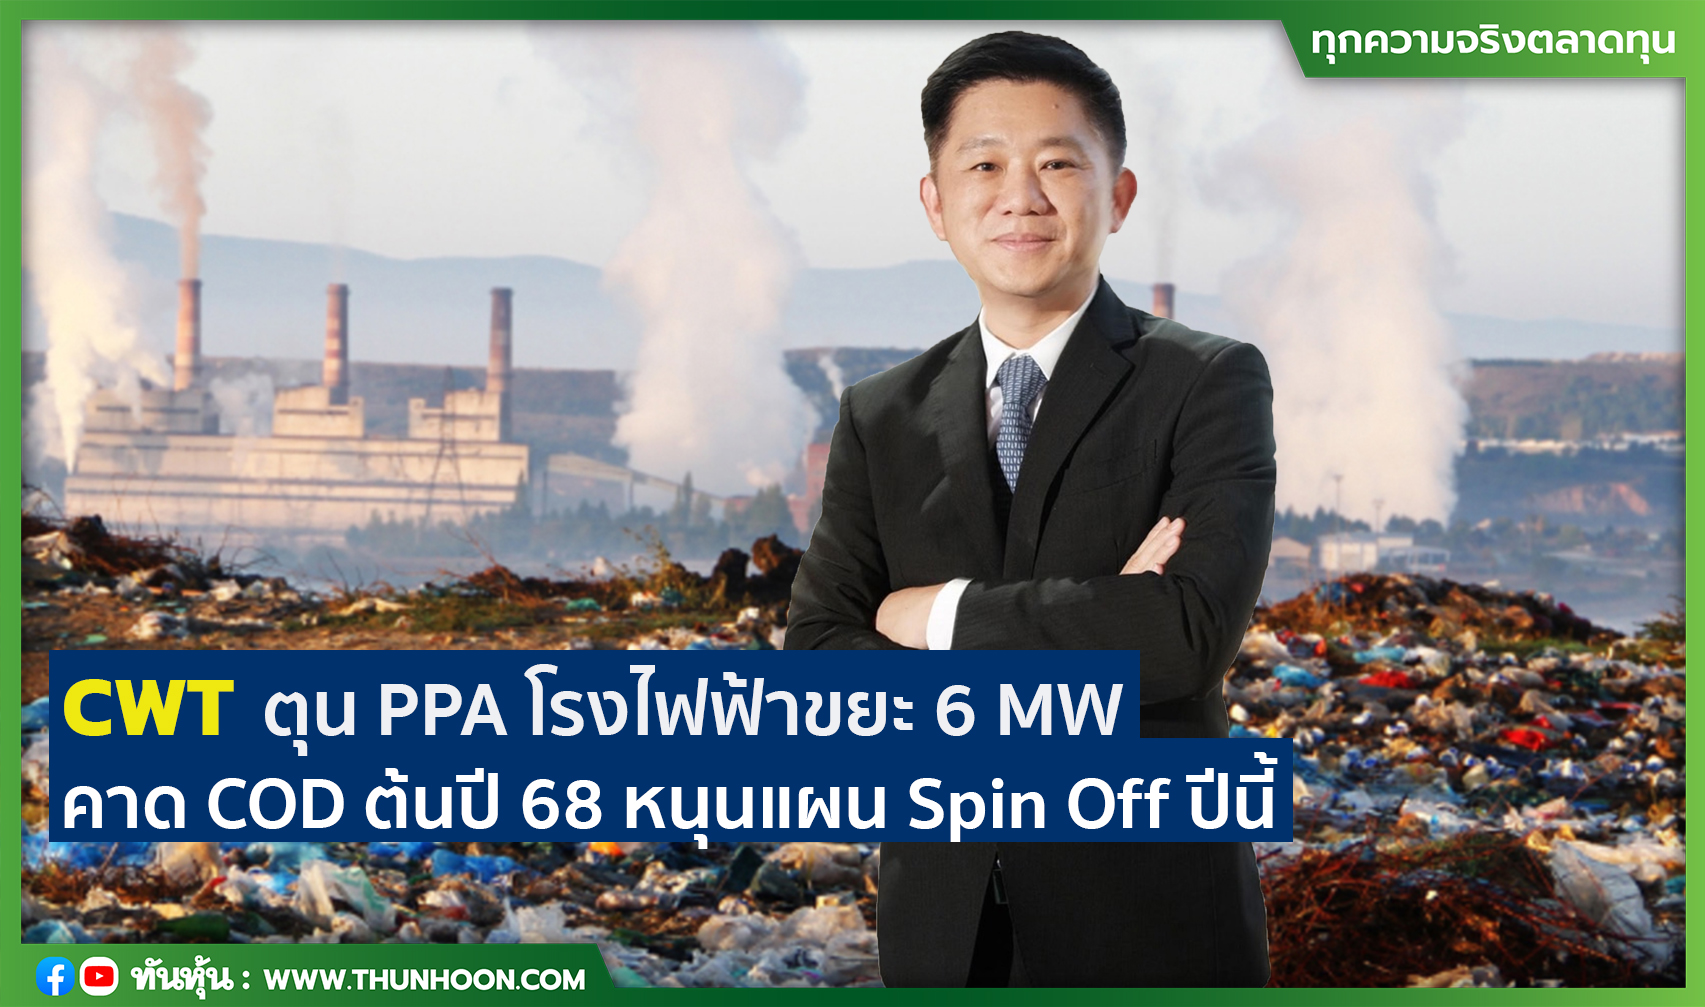 CWT ตุน PPA โรงไฟฟ้าขยะ 6 MW คาด COD ต้นปี 68 หนุนแผน Spin Off ปีนี้